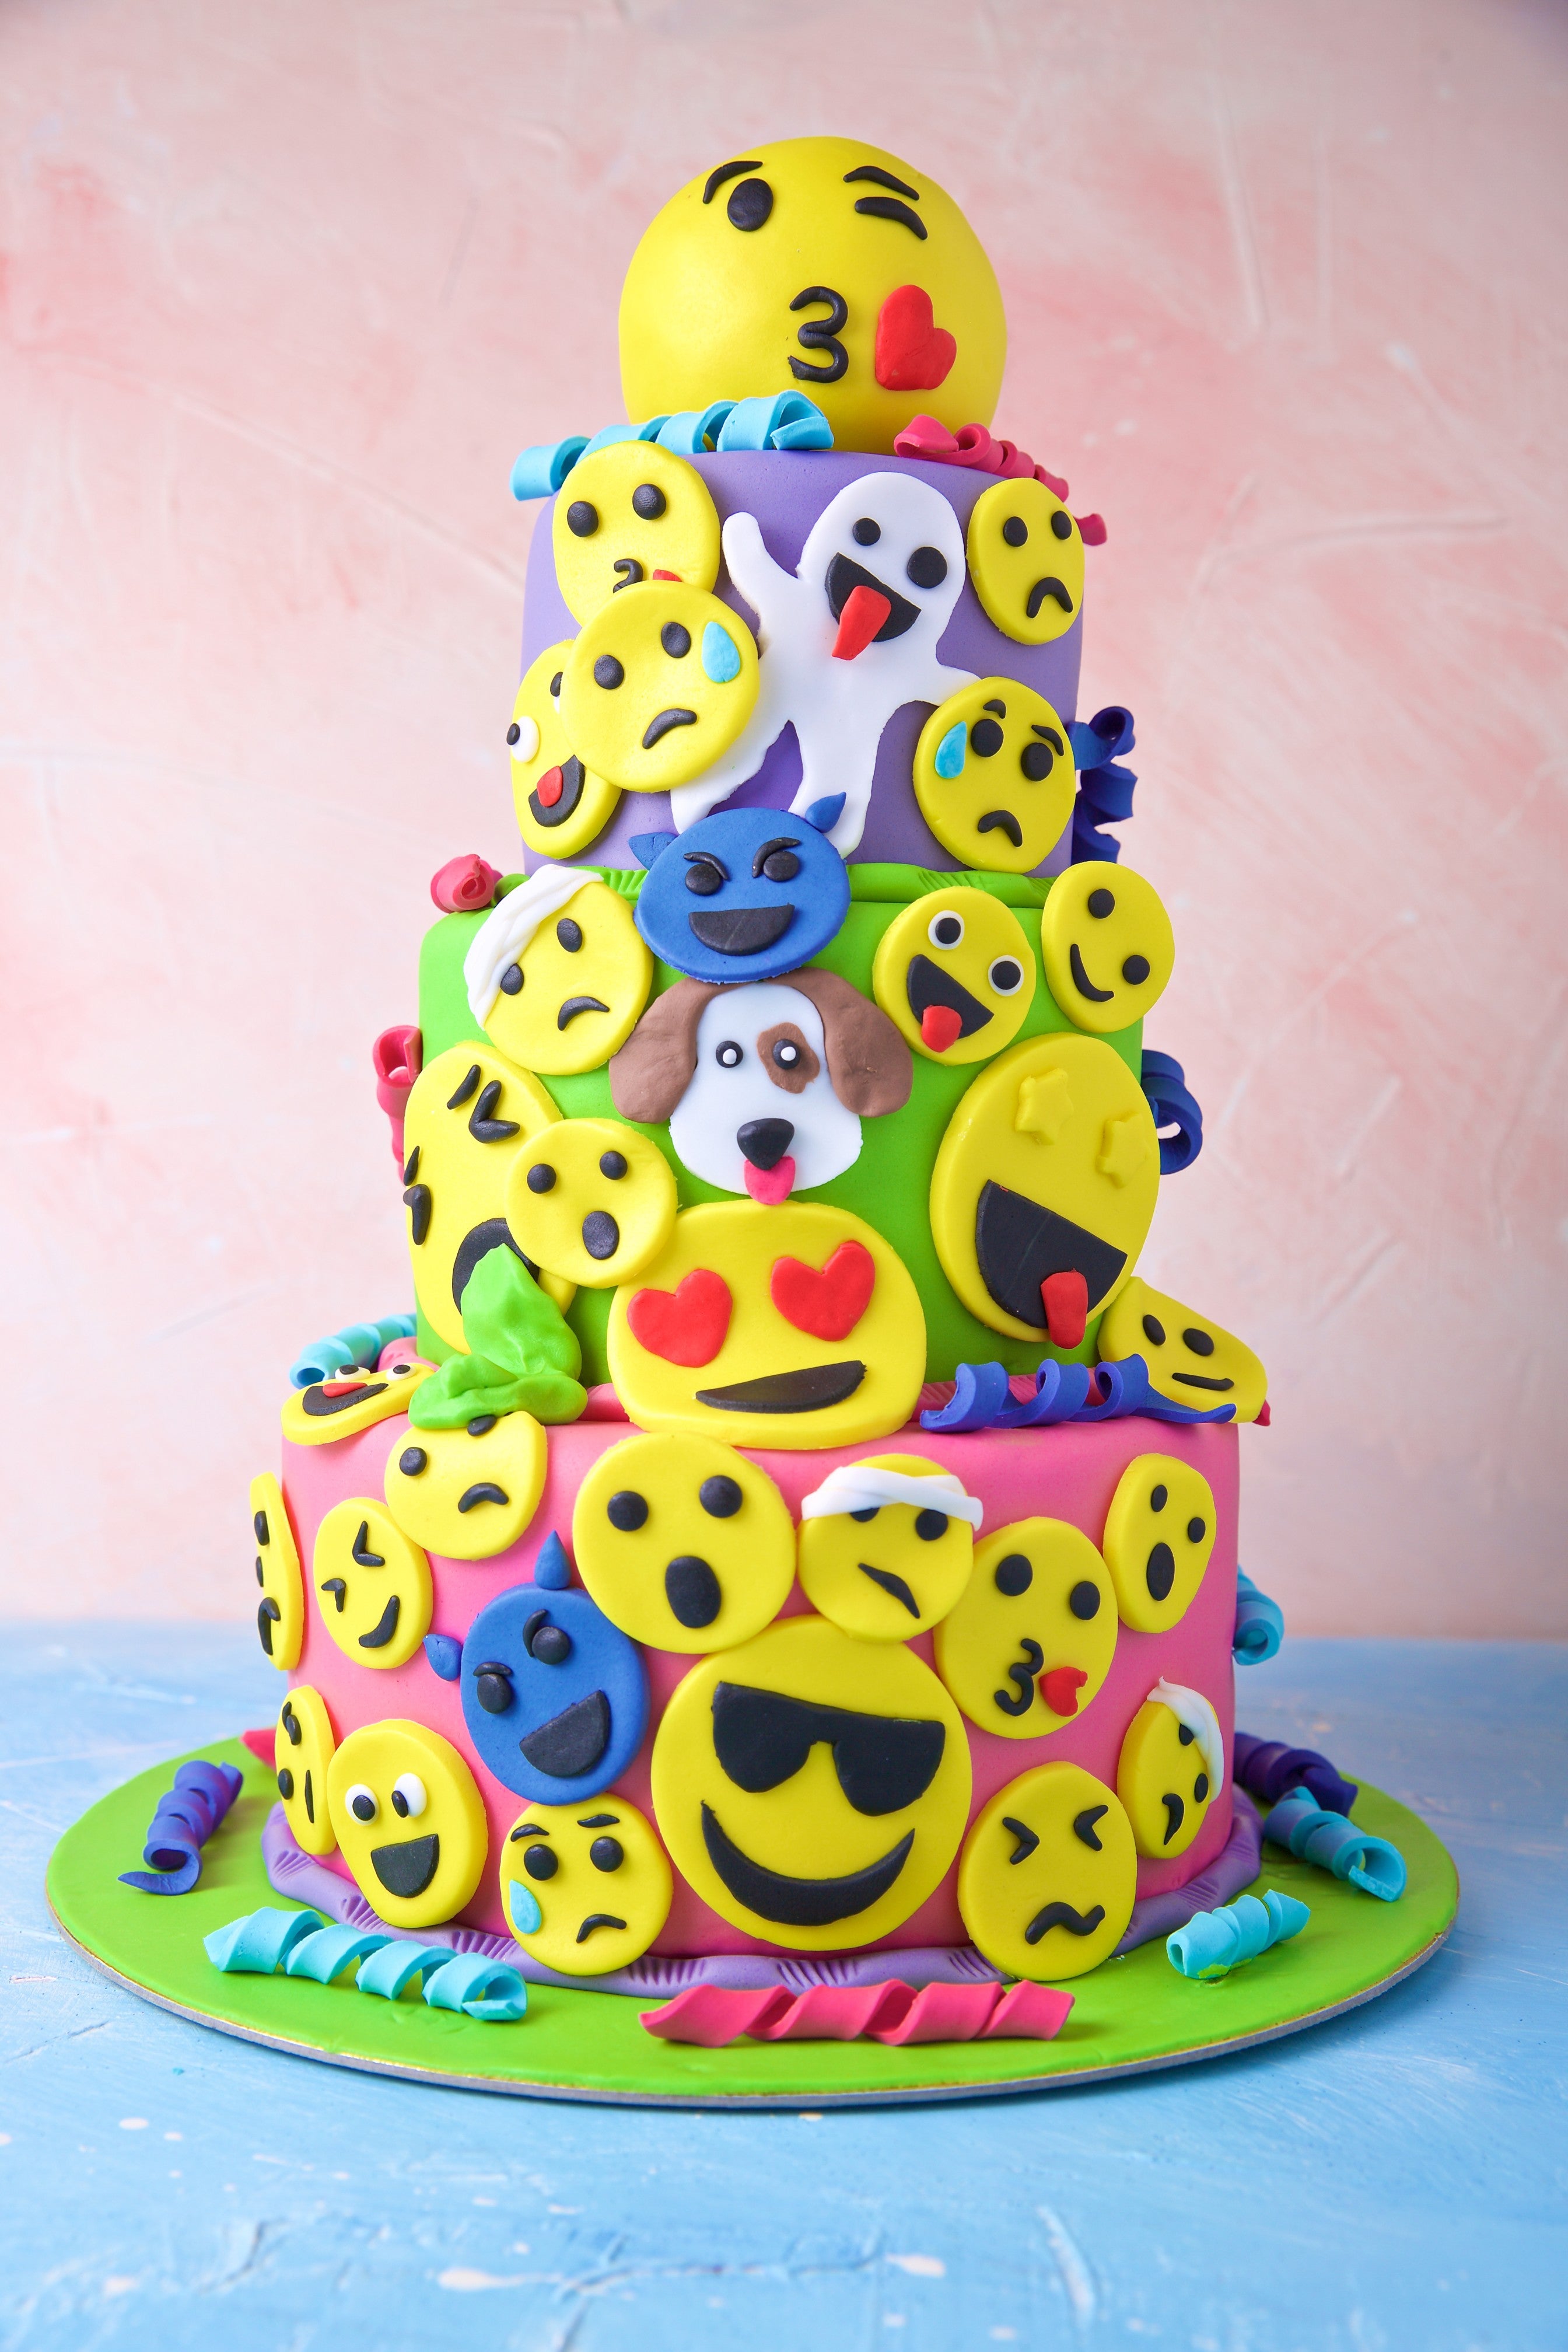 Emoji cake designs/ Emoji Birthday cake design /Emoji cake ideas. - YouTube